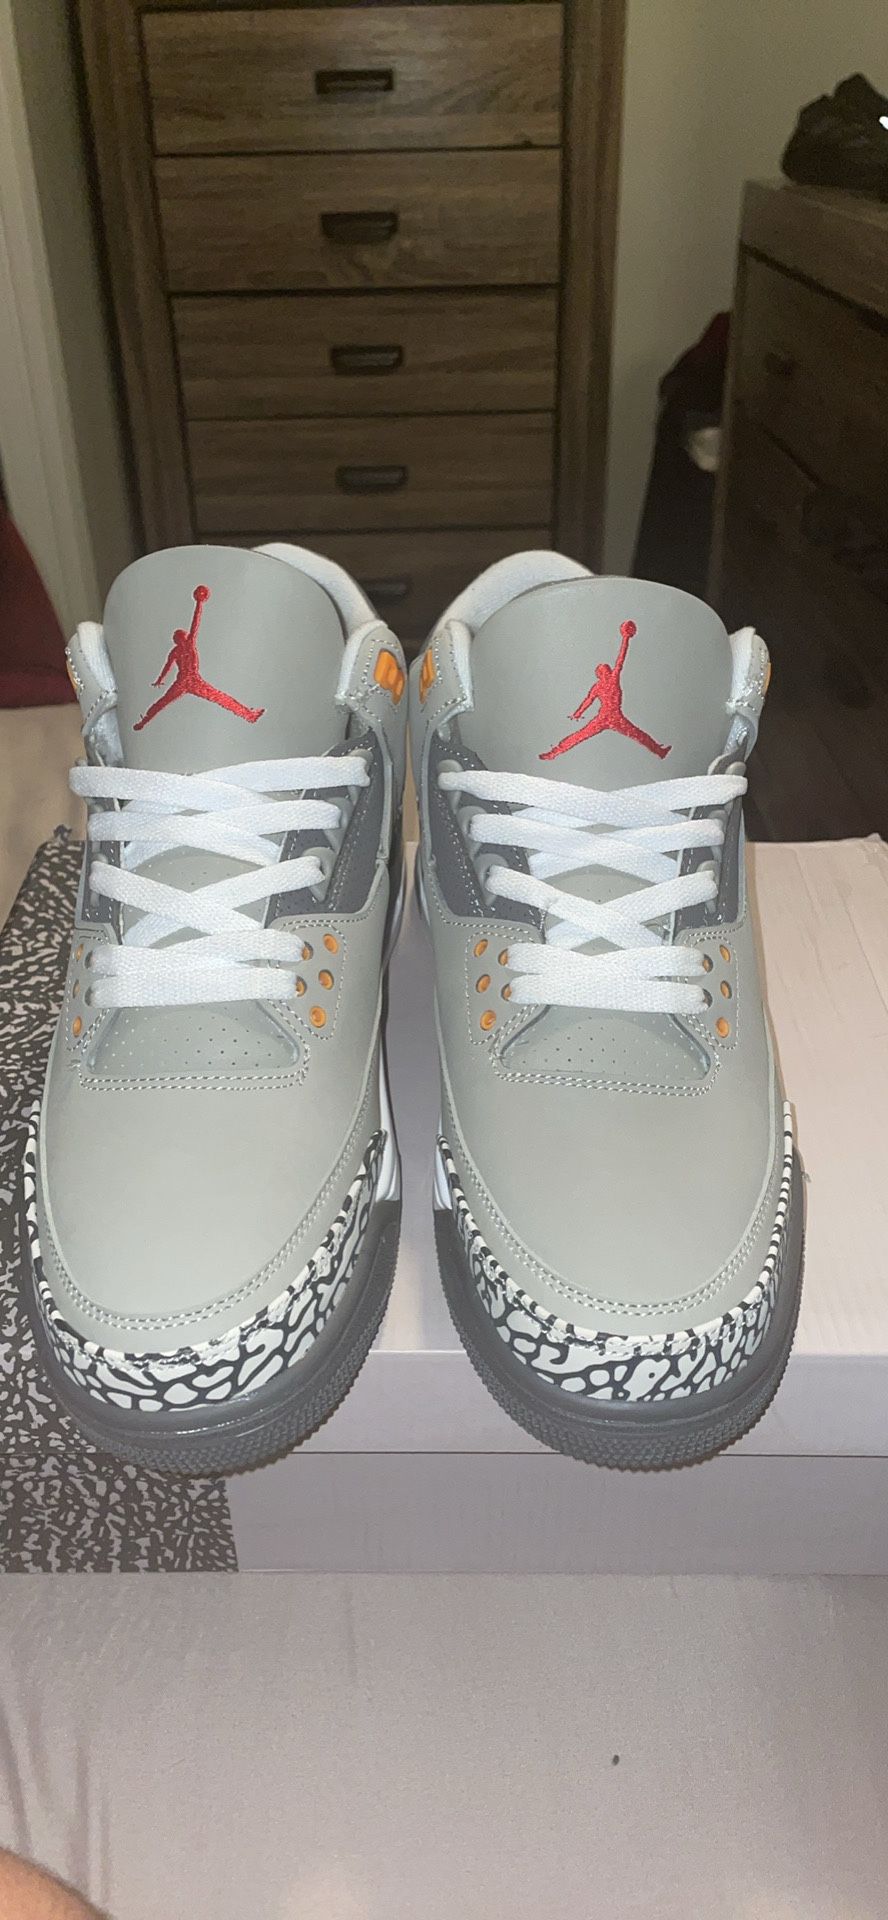 Jordan 3 Cool Greys Size 10